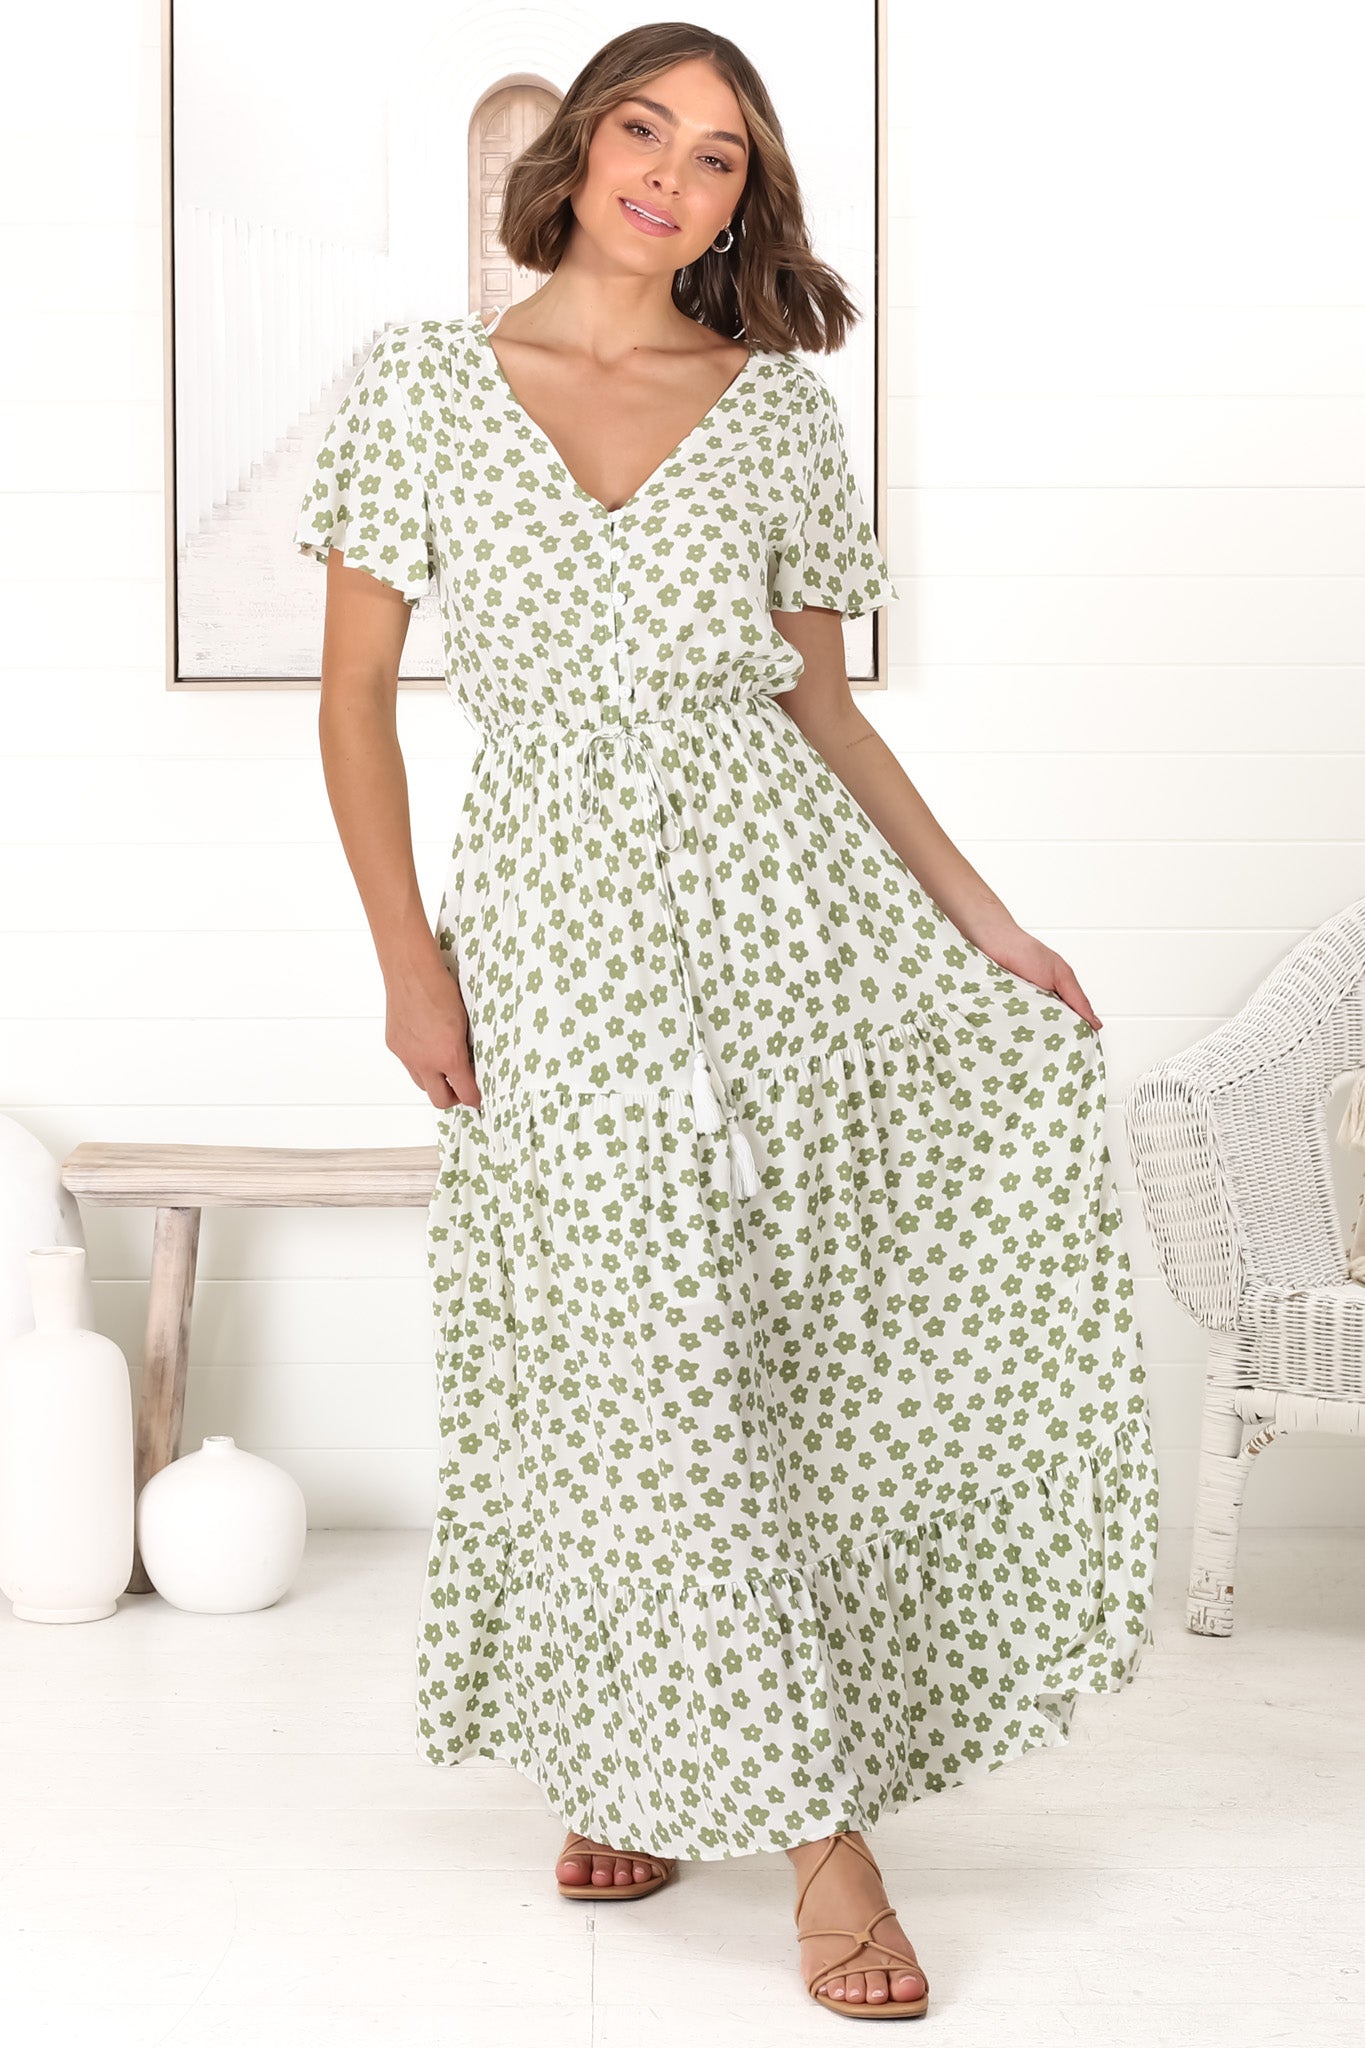 Derla Maxi Dress - V Neck A Line Dress with Tassel Pull Tie Wasit in Gellina Print Kiwi